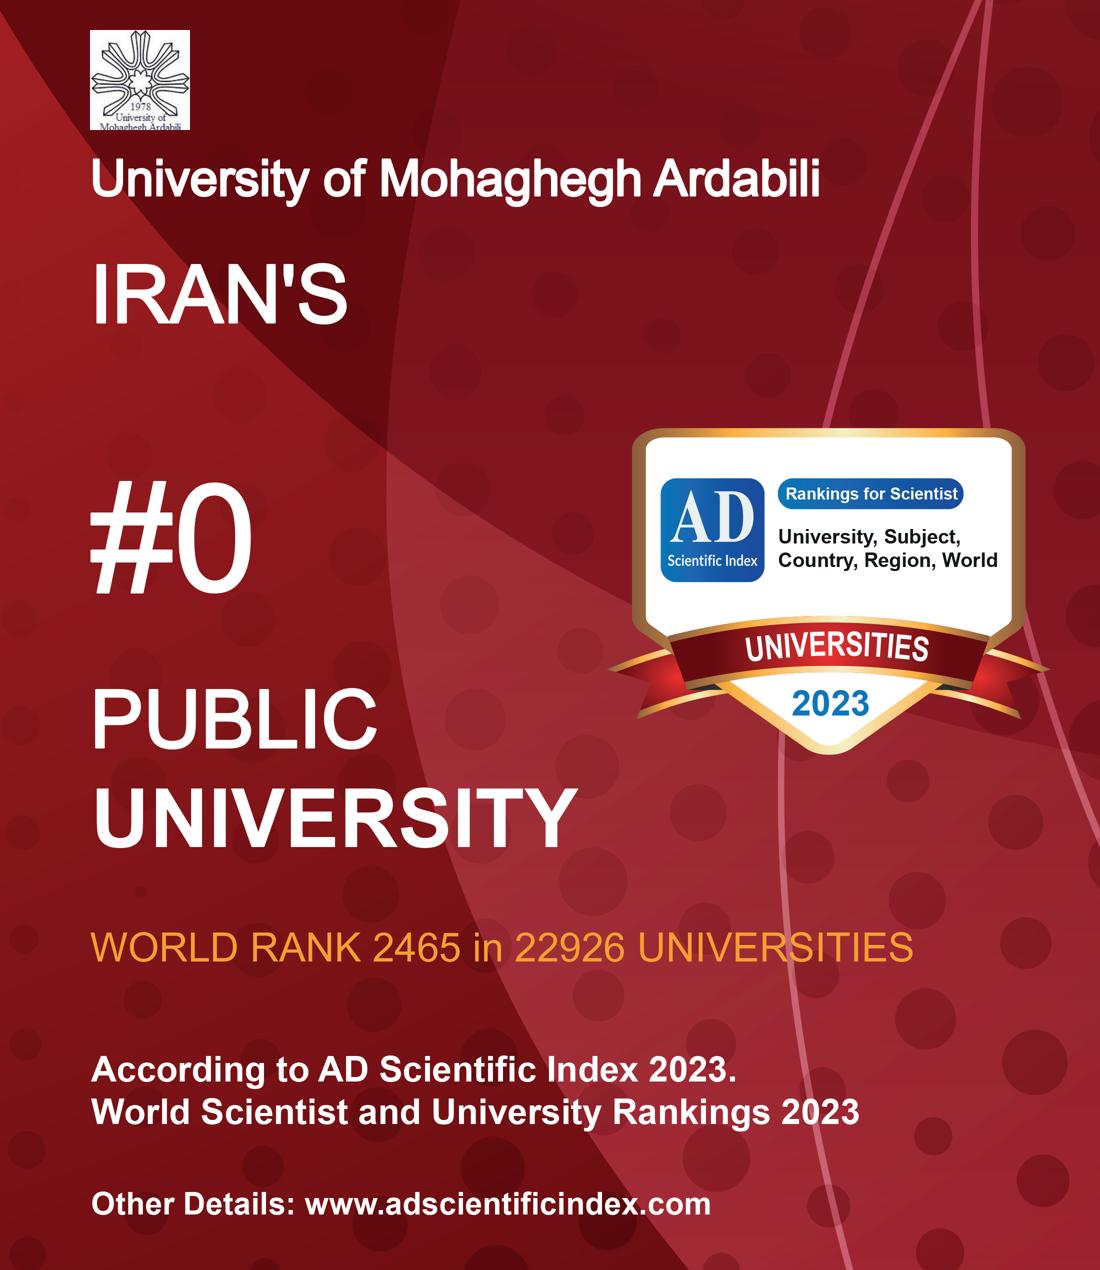 University of Mohaghegh Ardabili